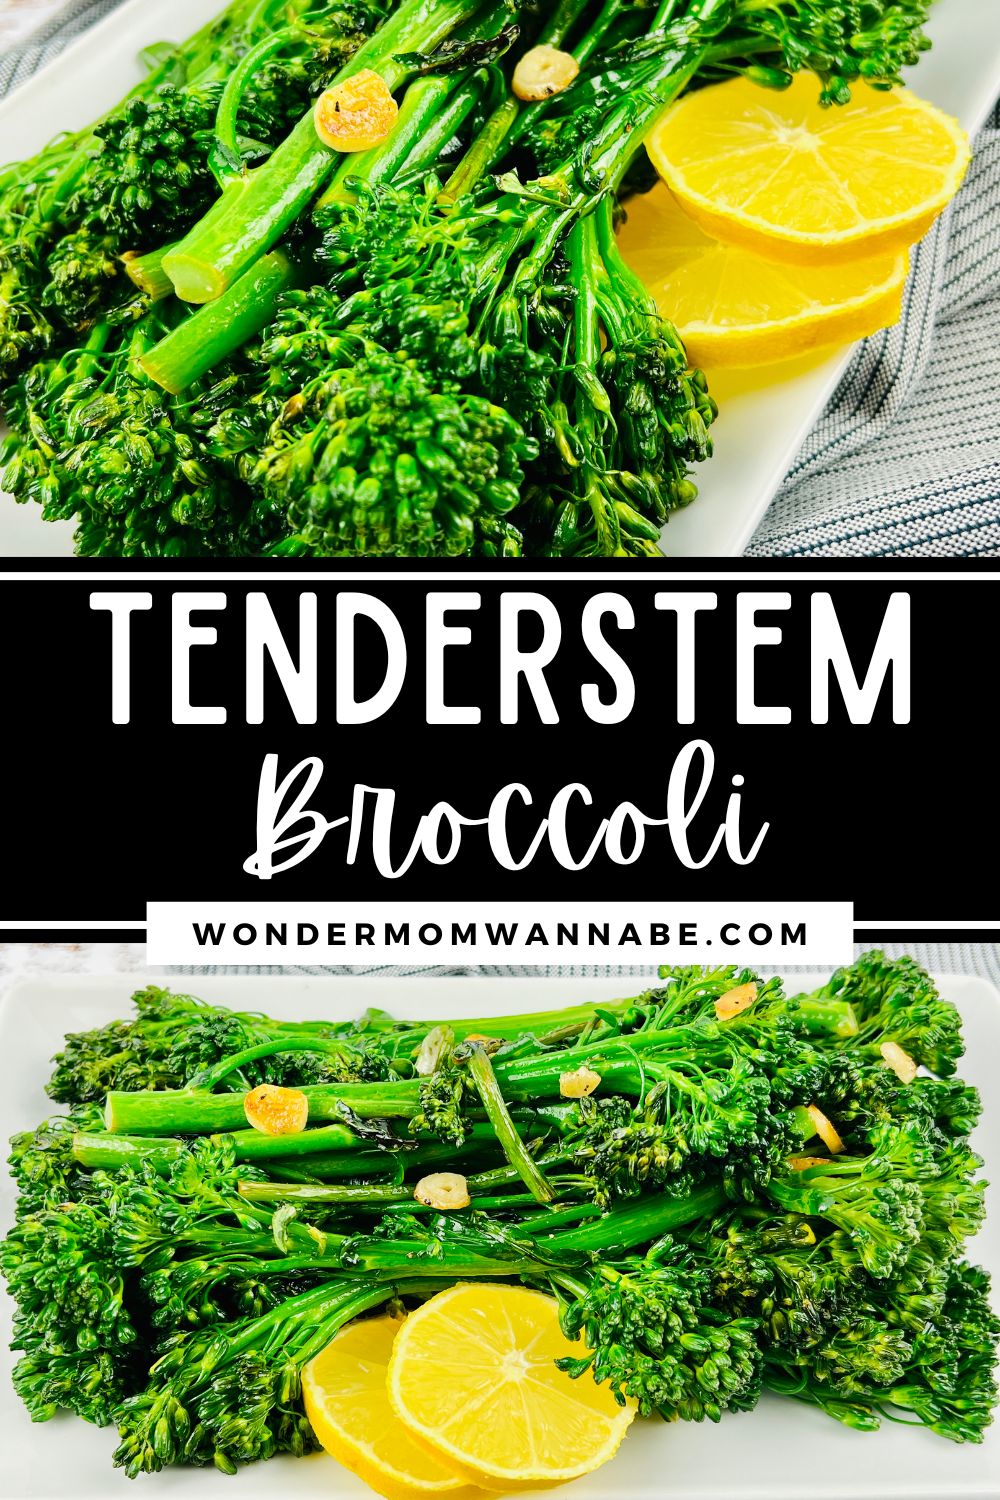 Fresh Tenderstem broccoli with lemon slices on a white plate.